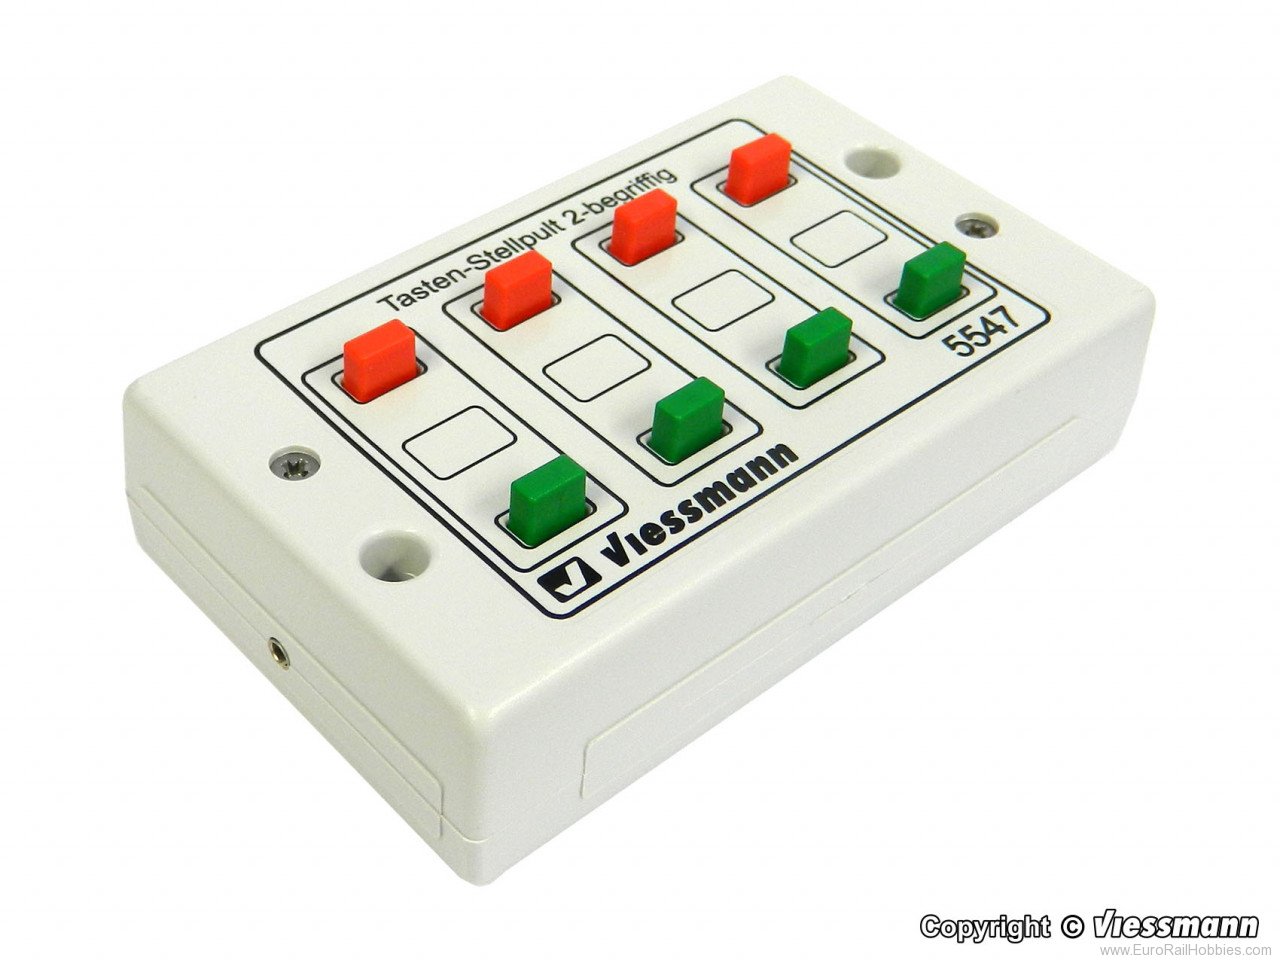 Viessmann 5547 Push button panel, double aspects